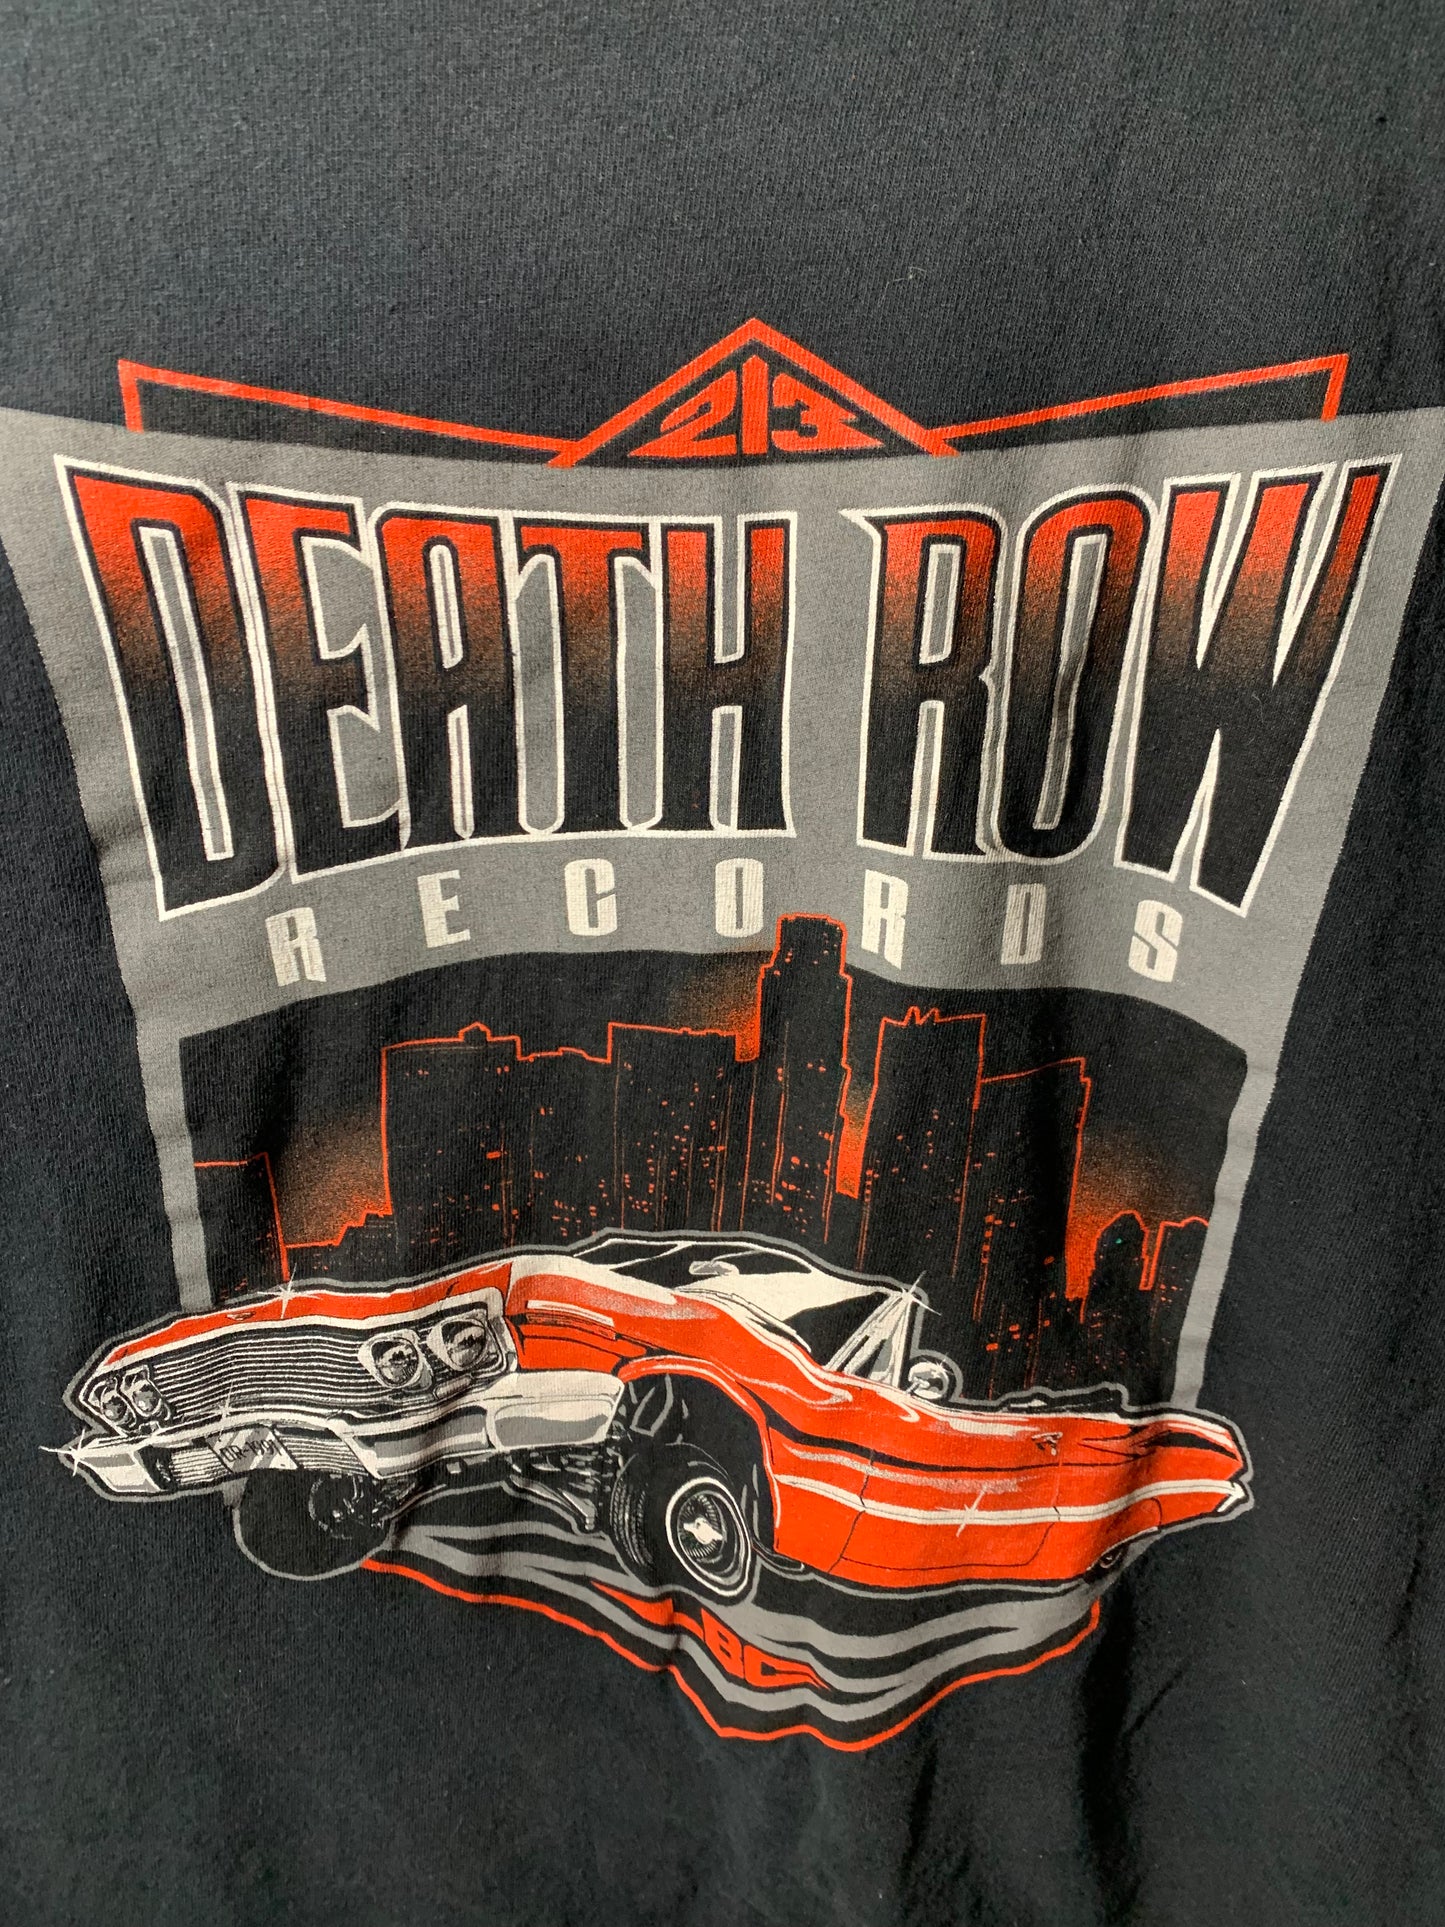 Death row records tee